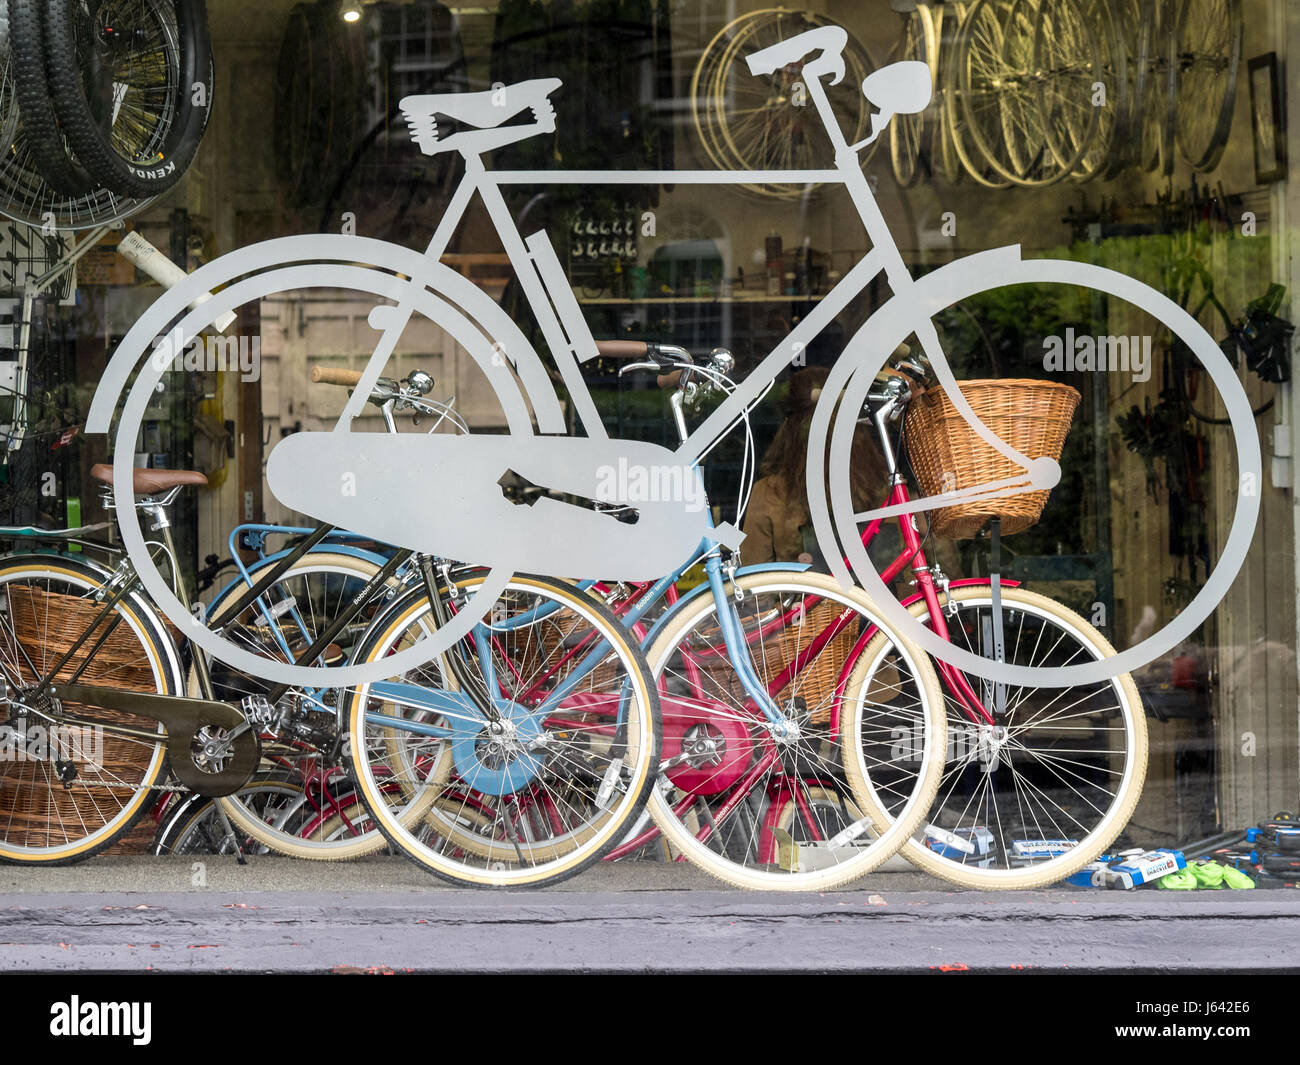 Display in a bike shop window in Mill Road, Cambridge UK Stock Photo